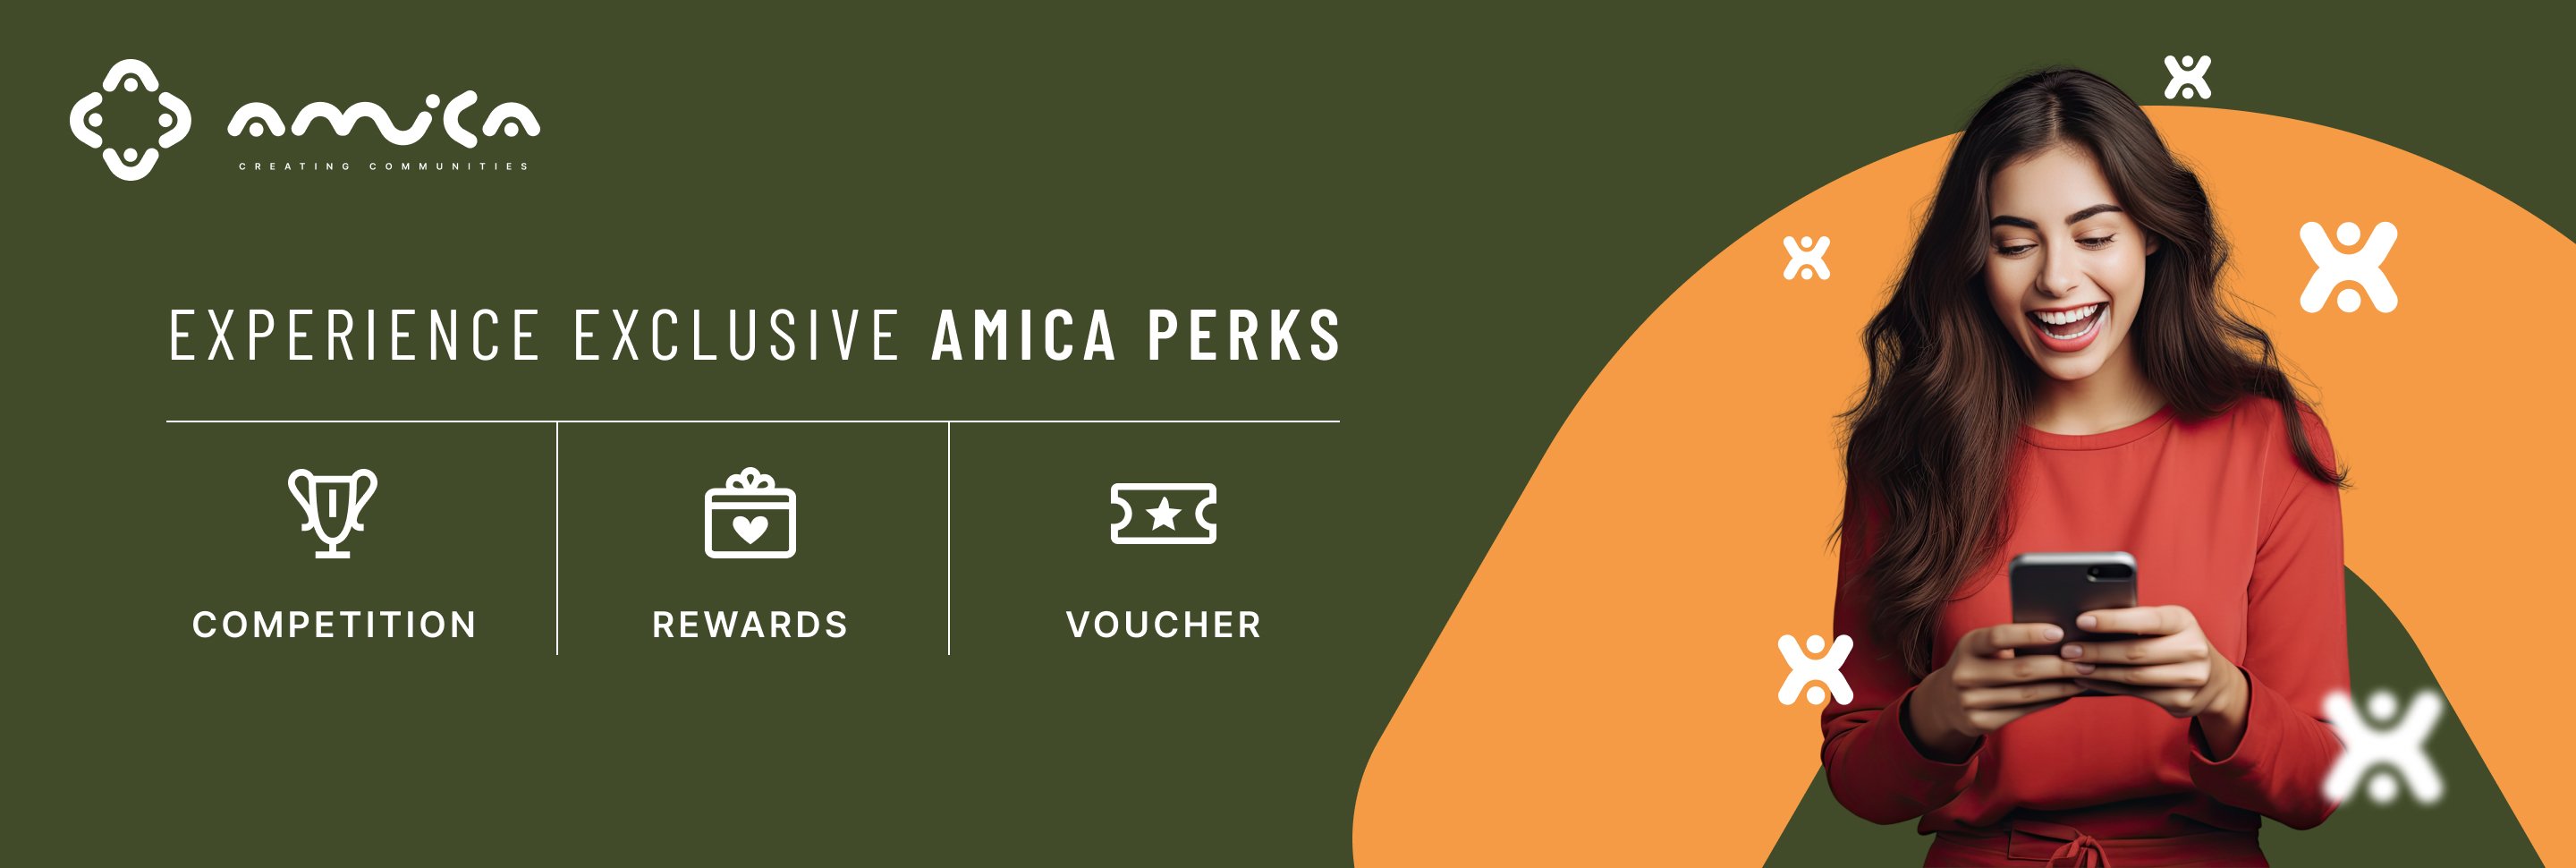 Amica Perks web banner